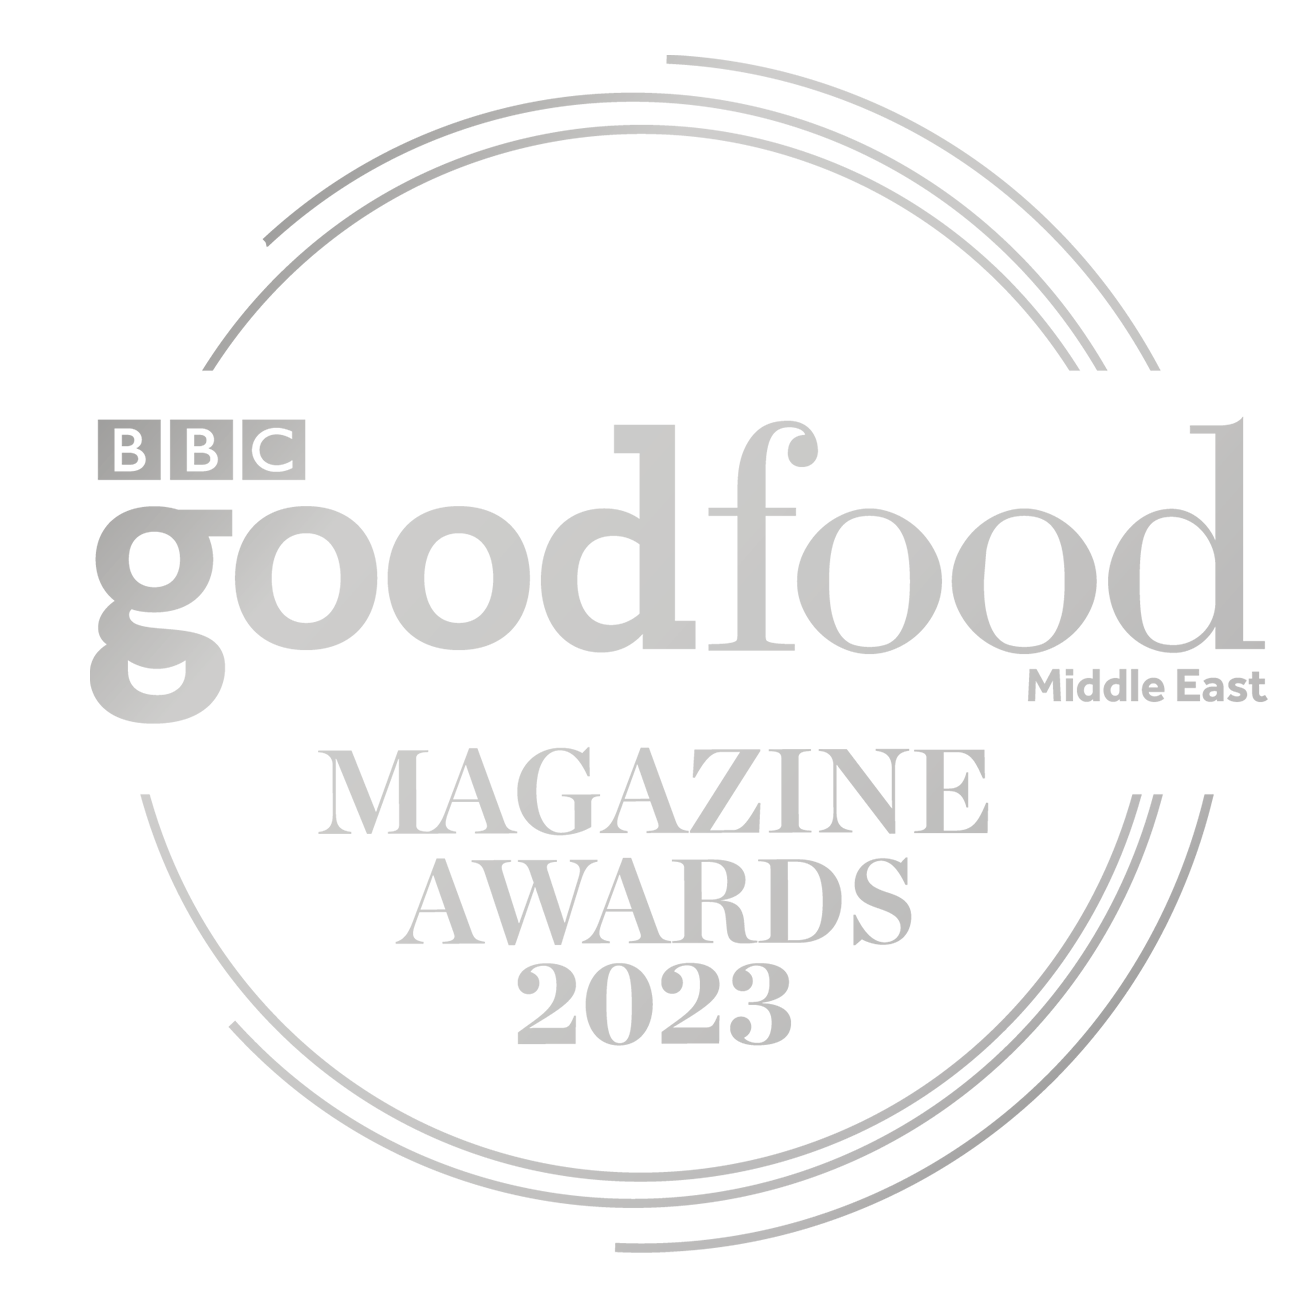 The BBC Good Food Middle East Magazine Awards 2023